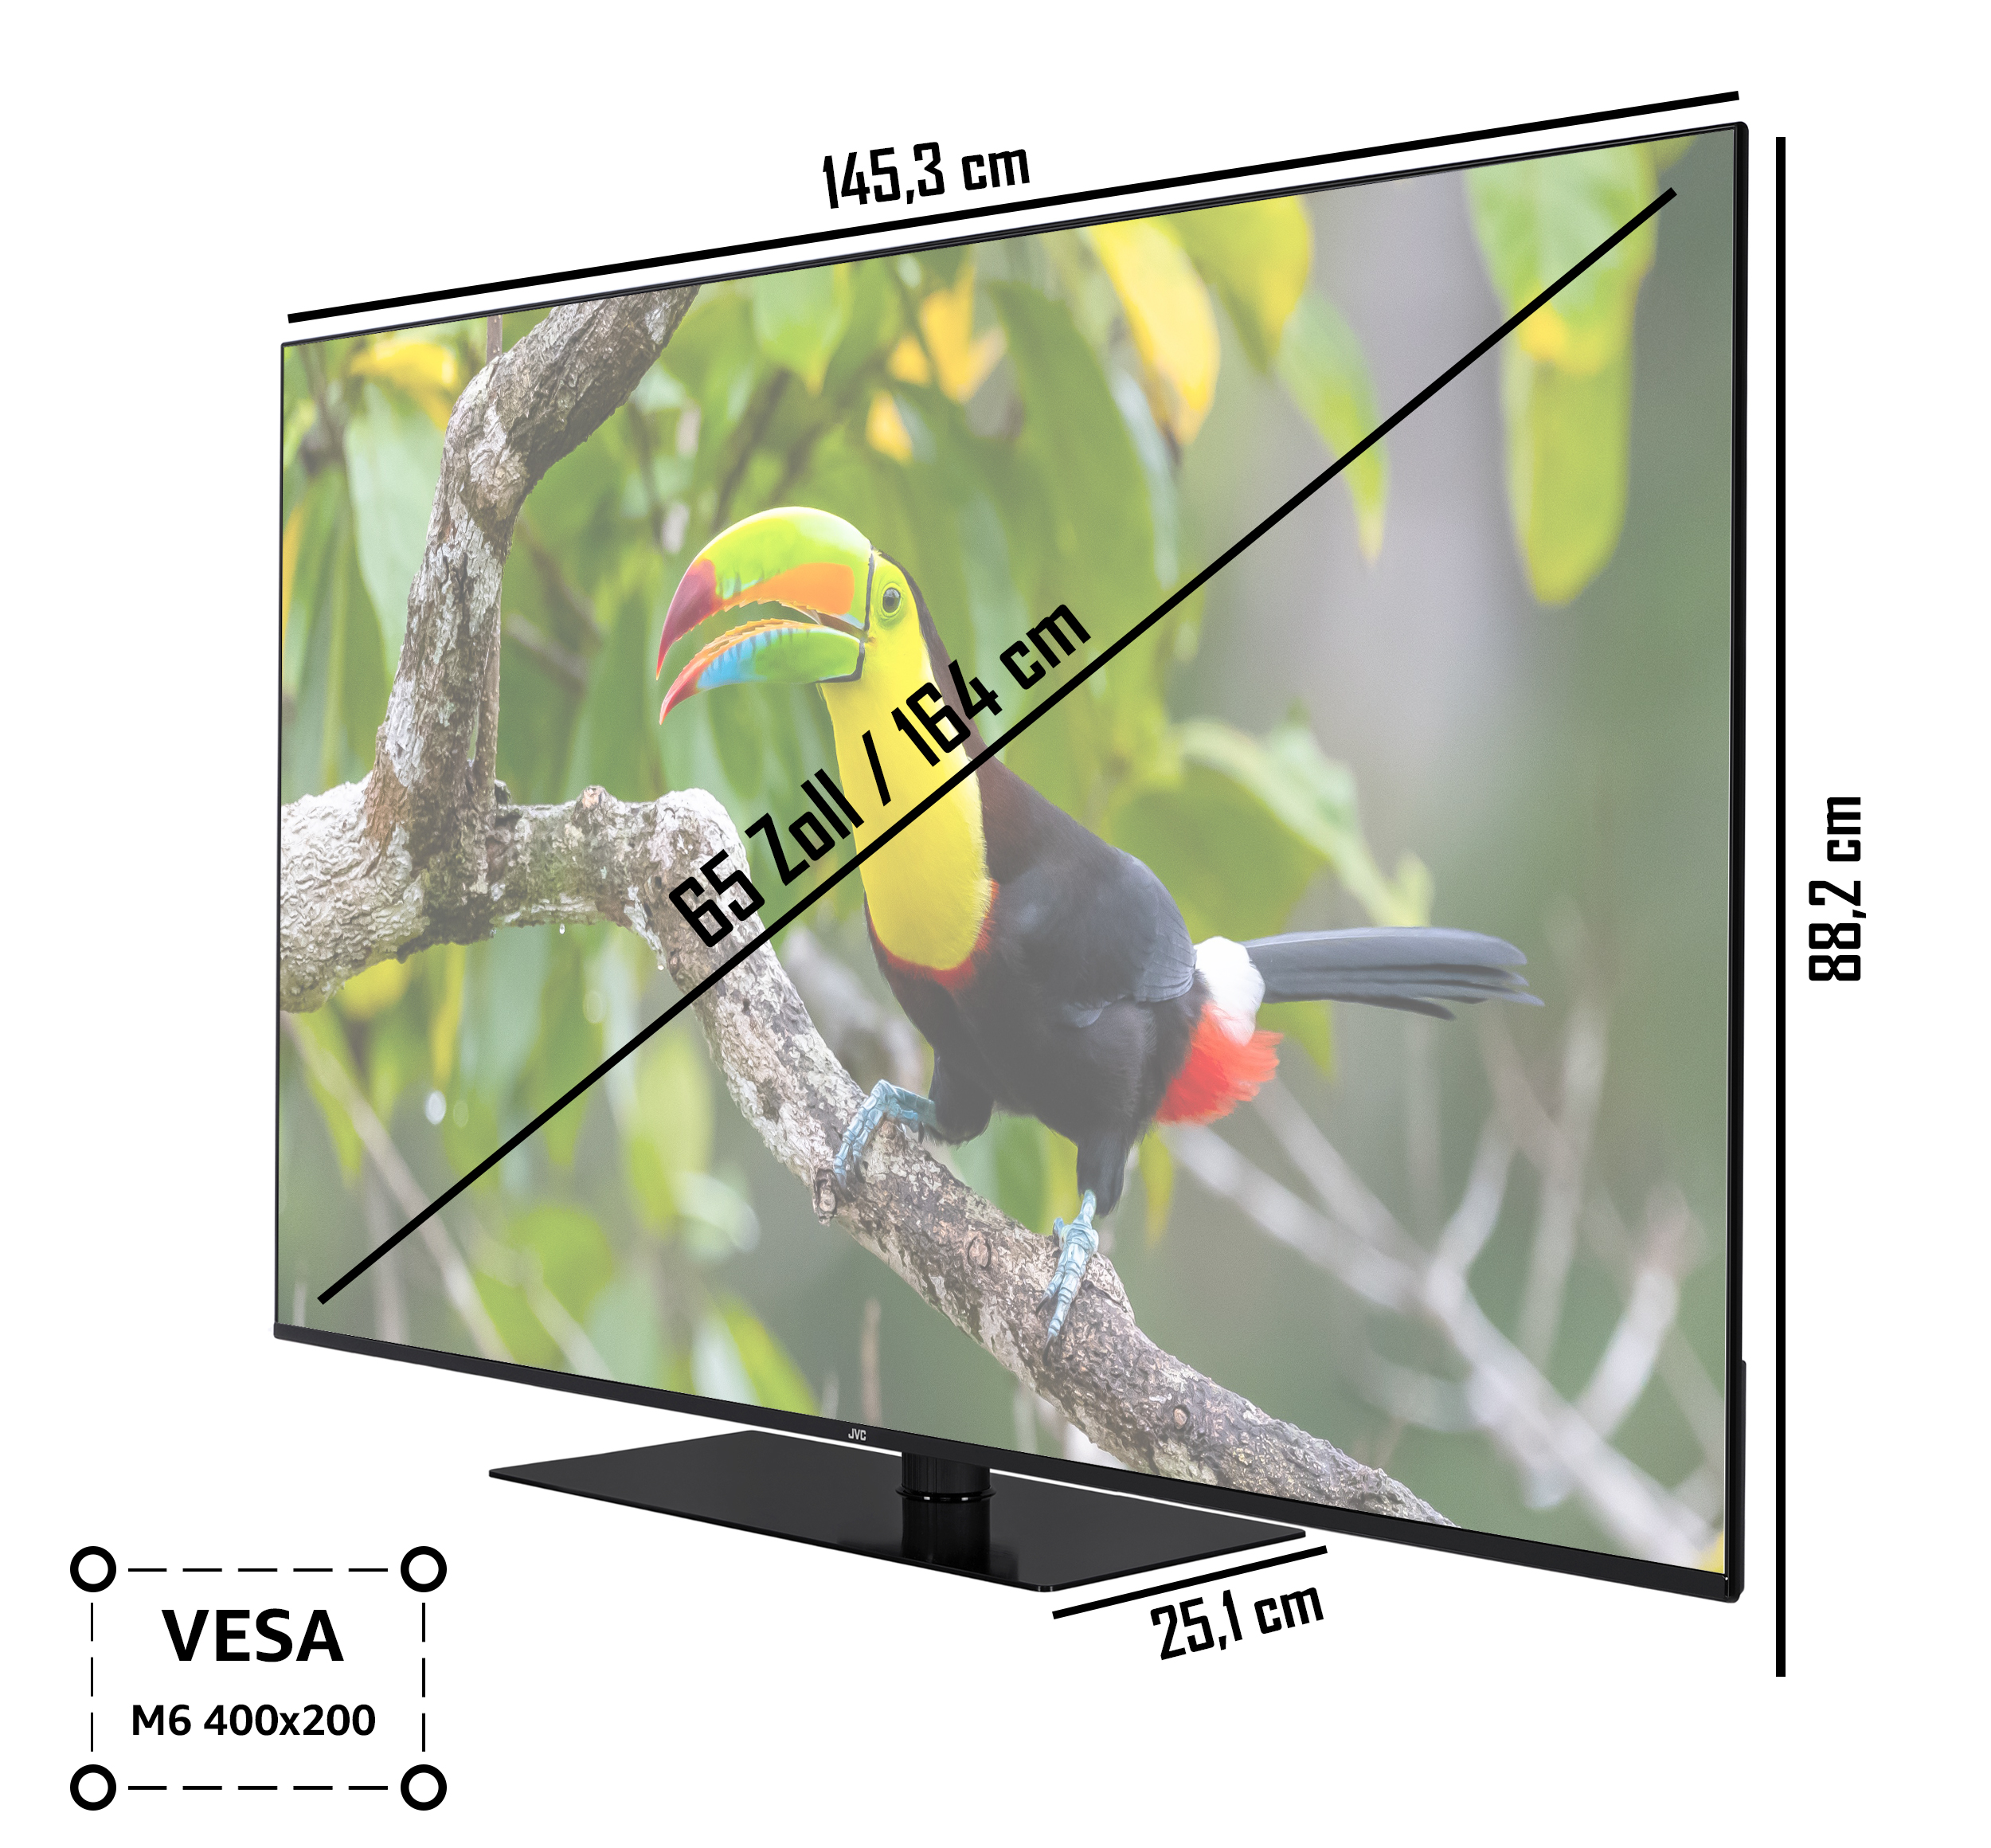 JVC LT-65VU6355 LED TV) (Flat, 65 UHD 4K, / TV SMART 164 Zoll cm